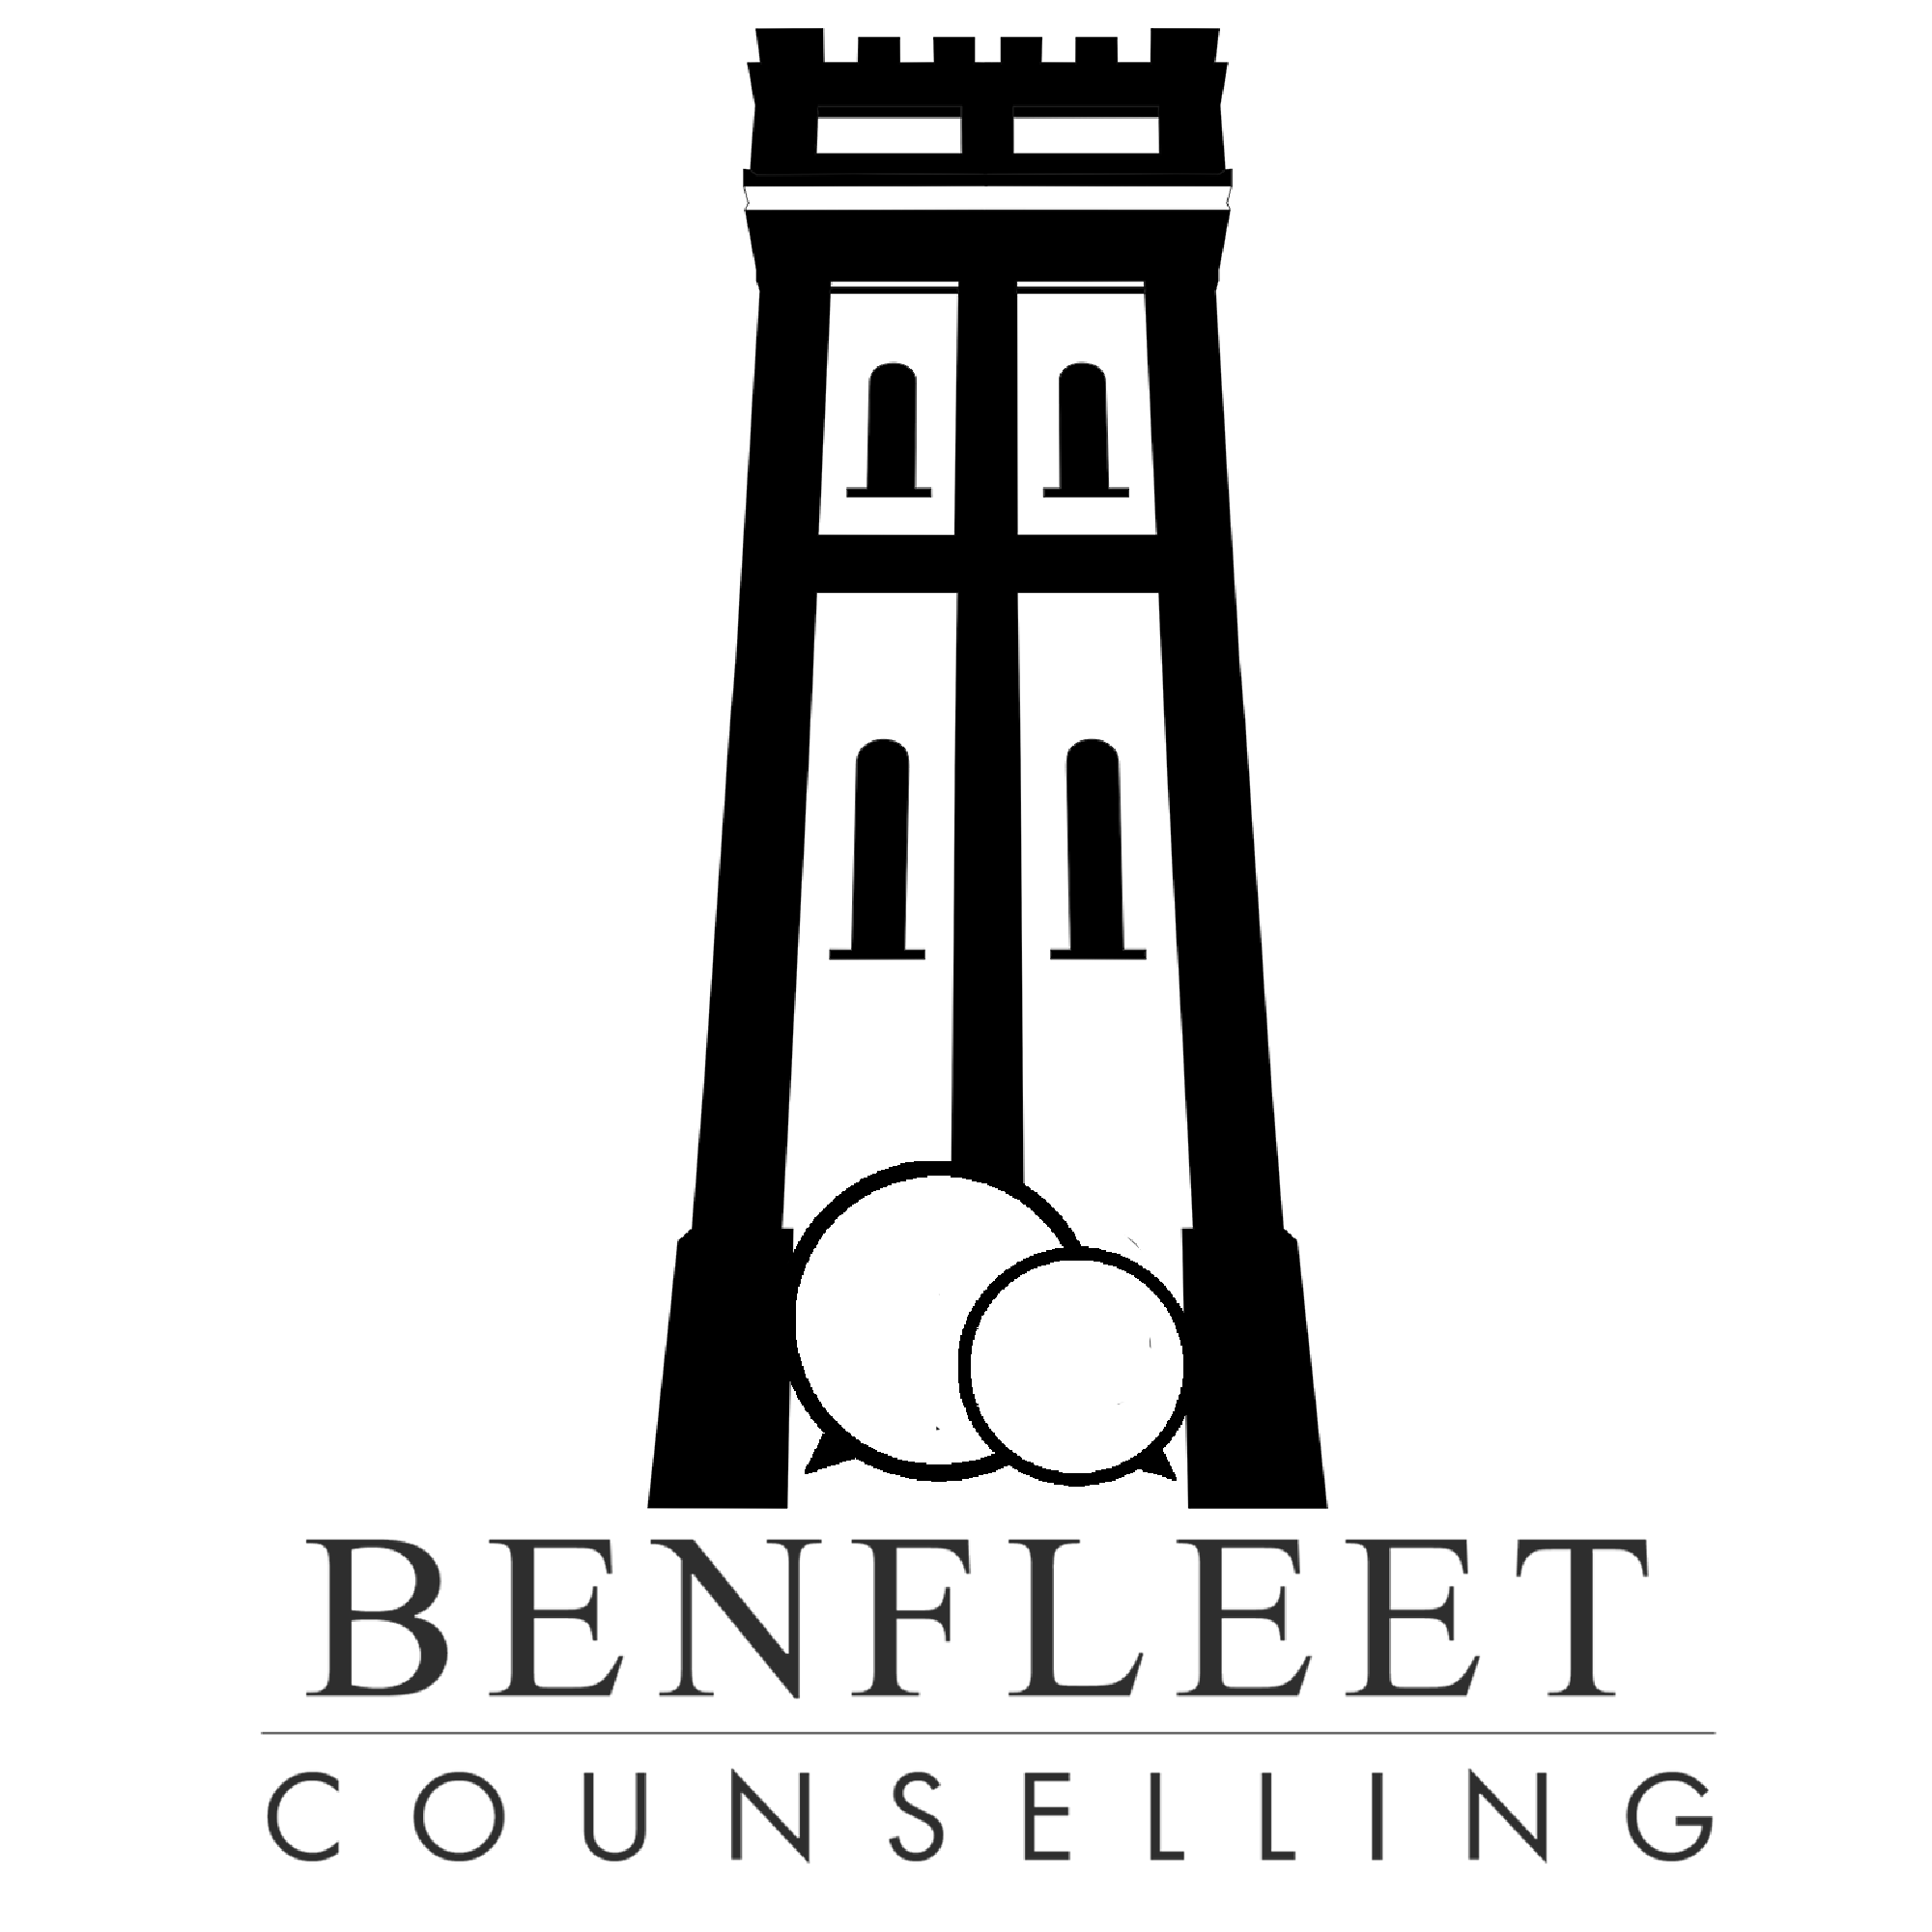 Benfleet Counselling